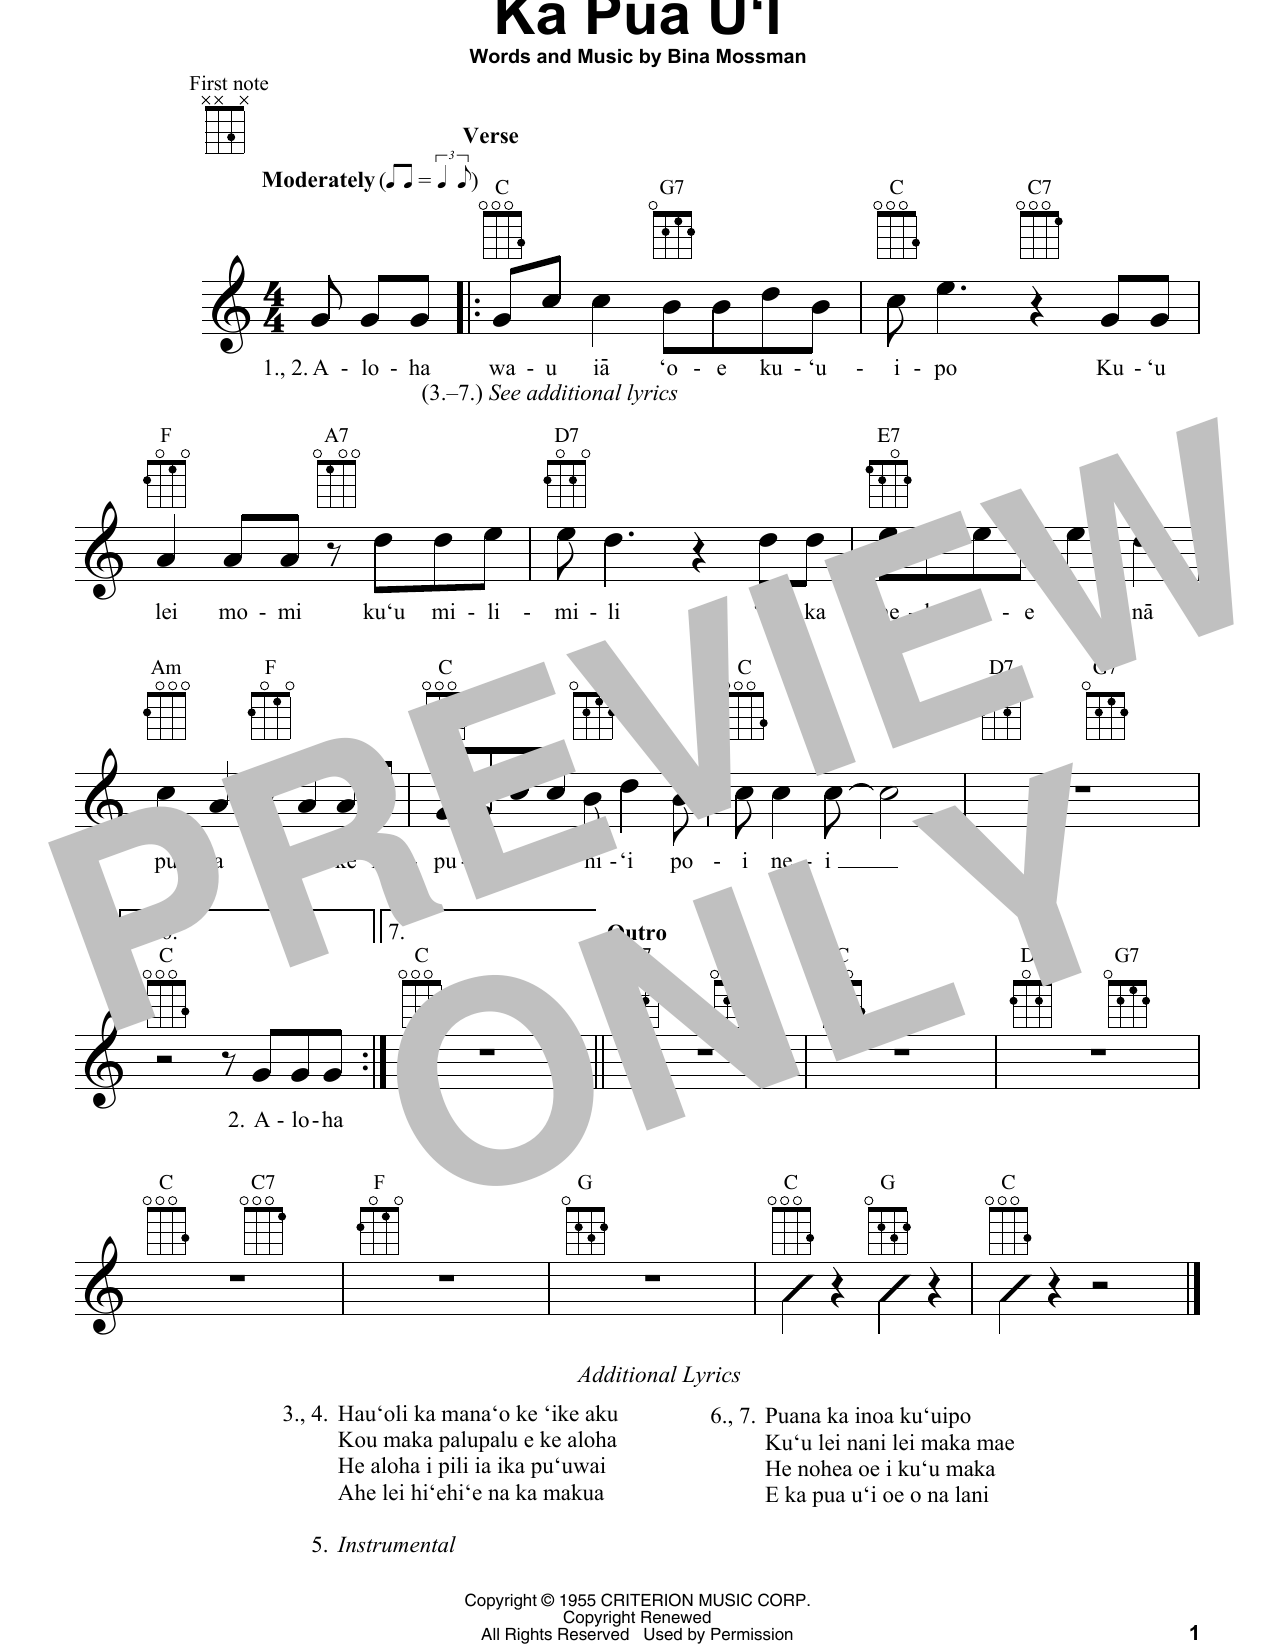 Download Bina Mossman Ka Pua U'I Sheet Music and learn how to play Ukulele PDF digital score in minutes